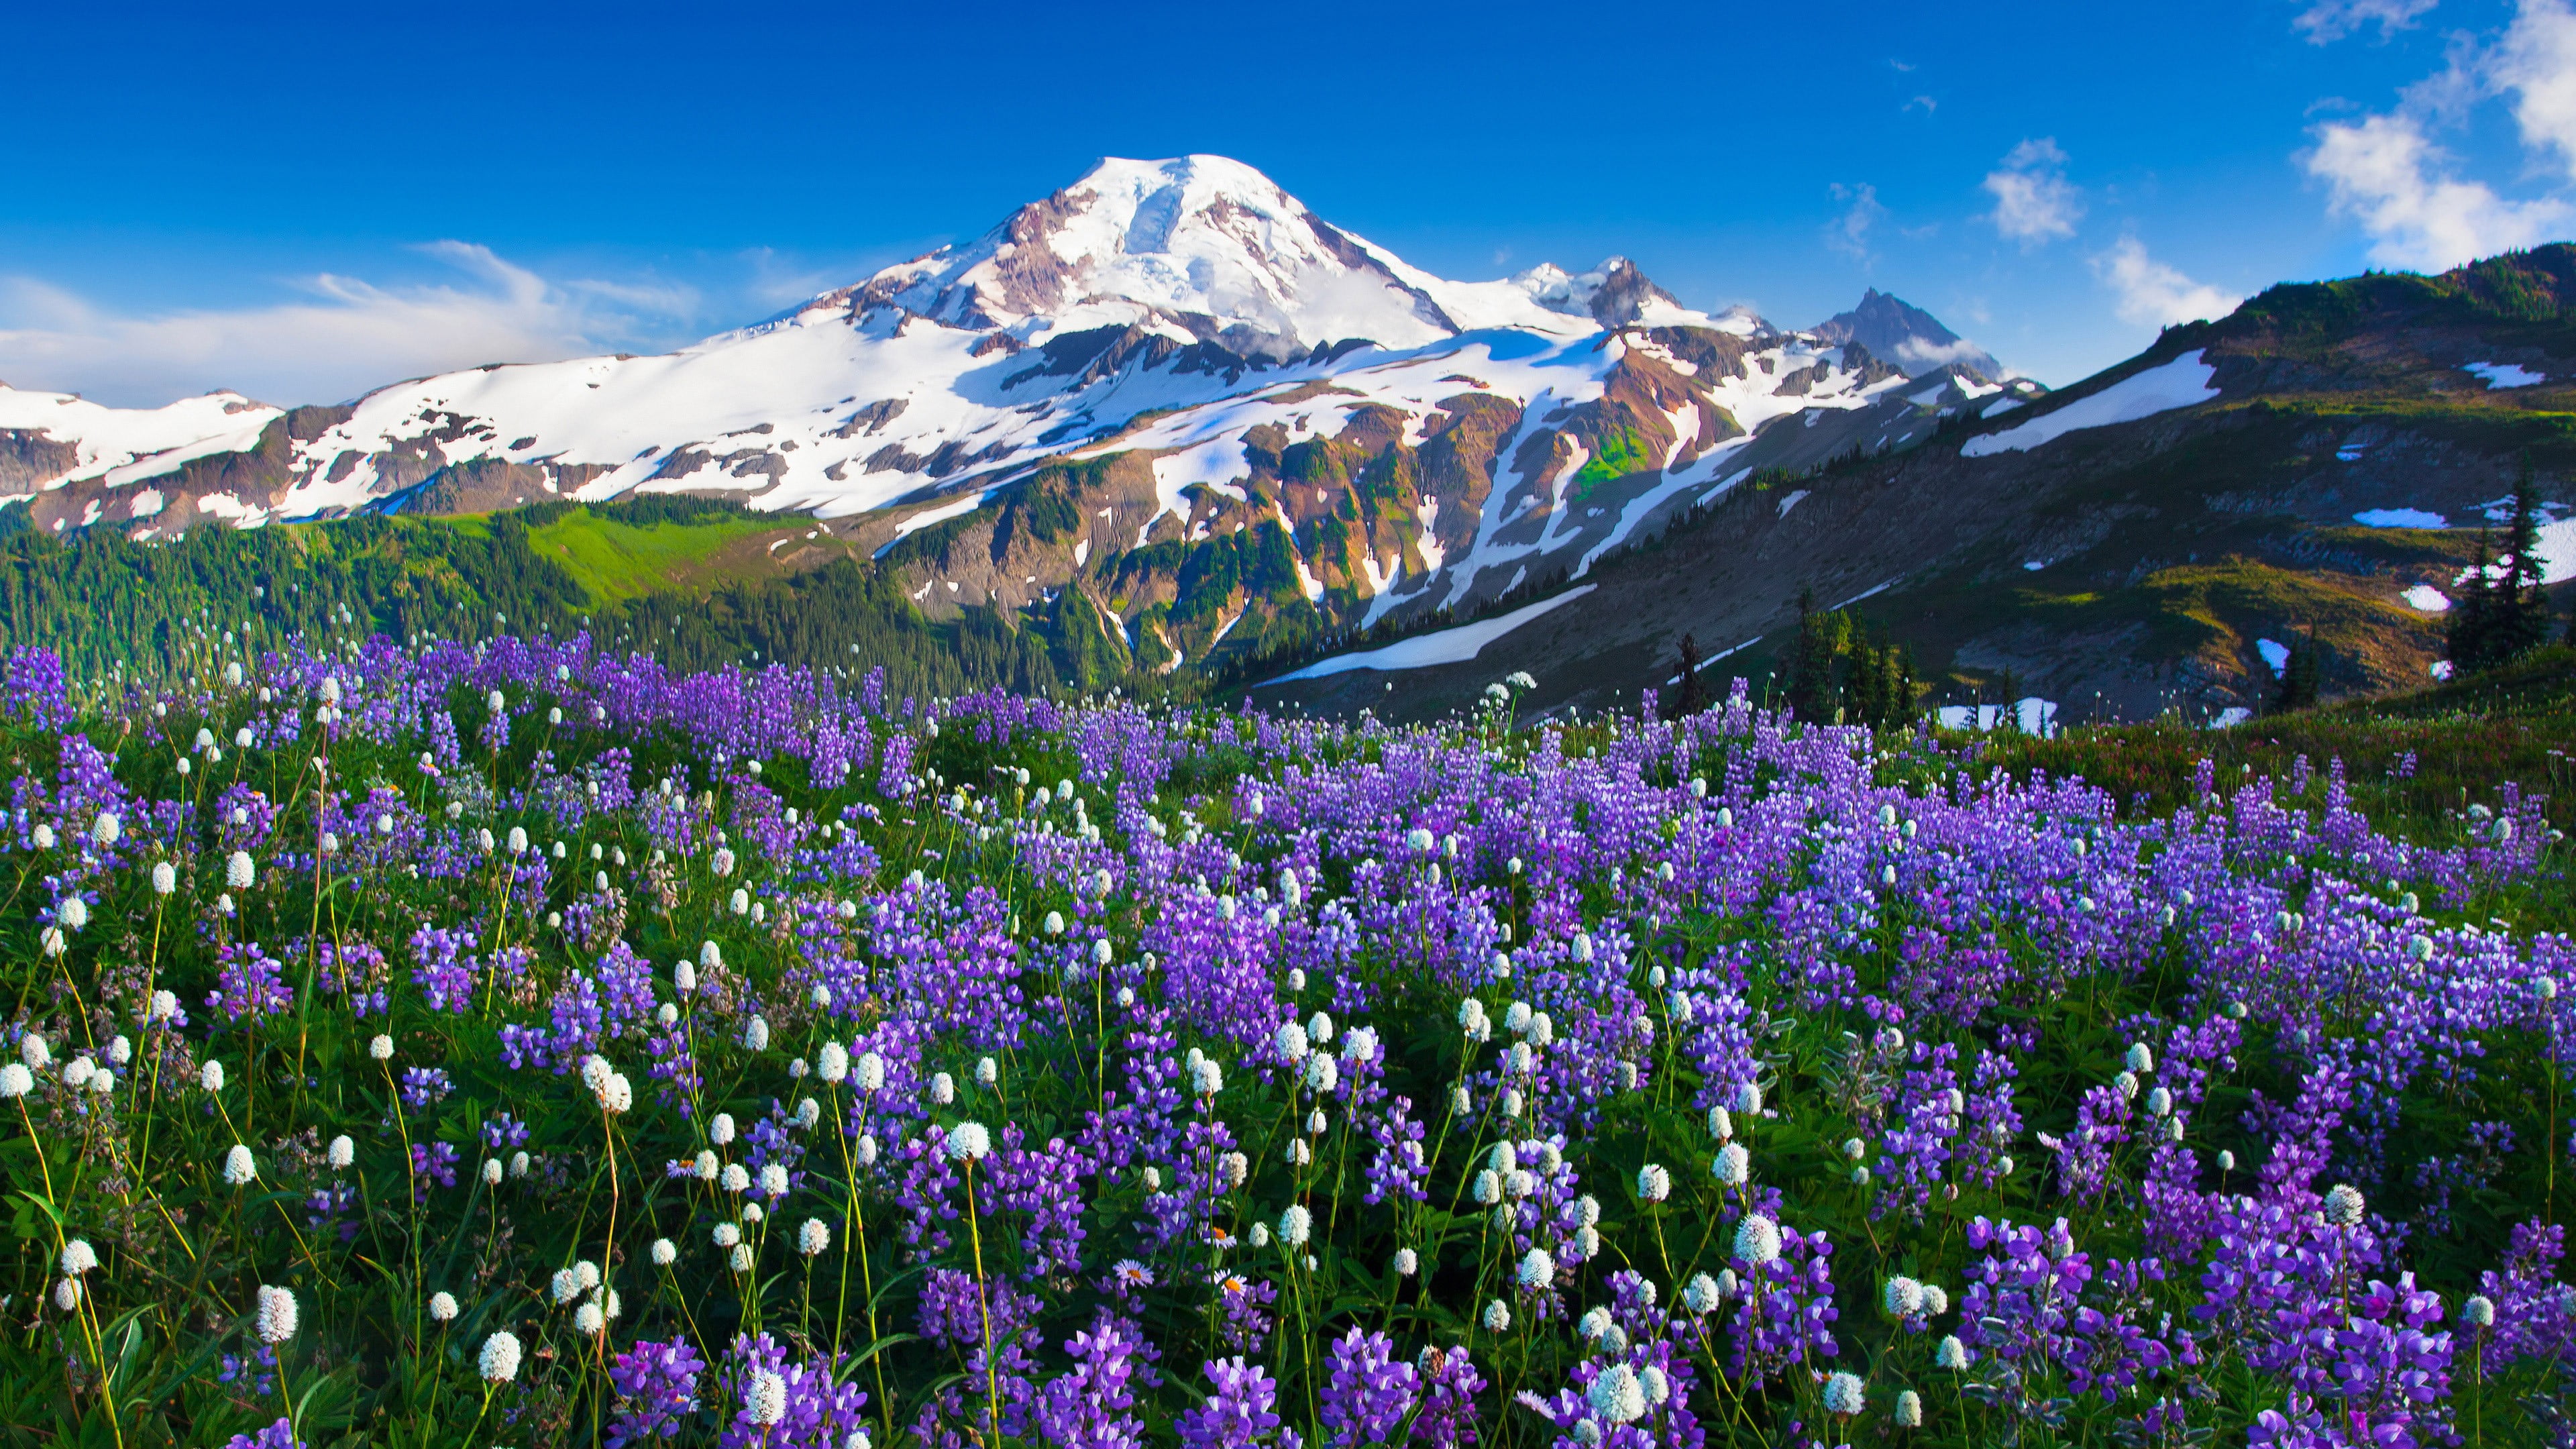 Purple petaled flowers, mountains